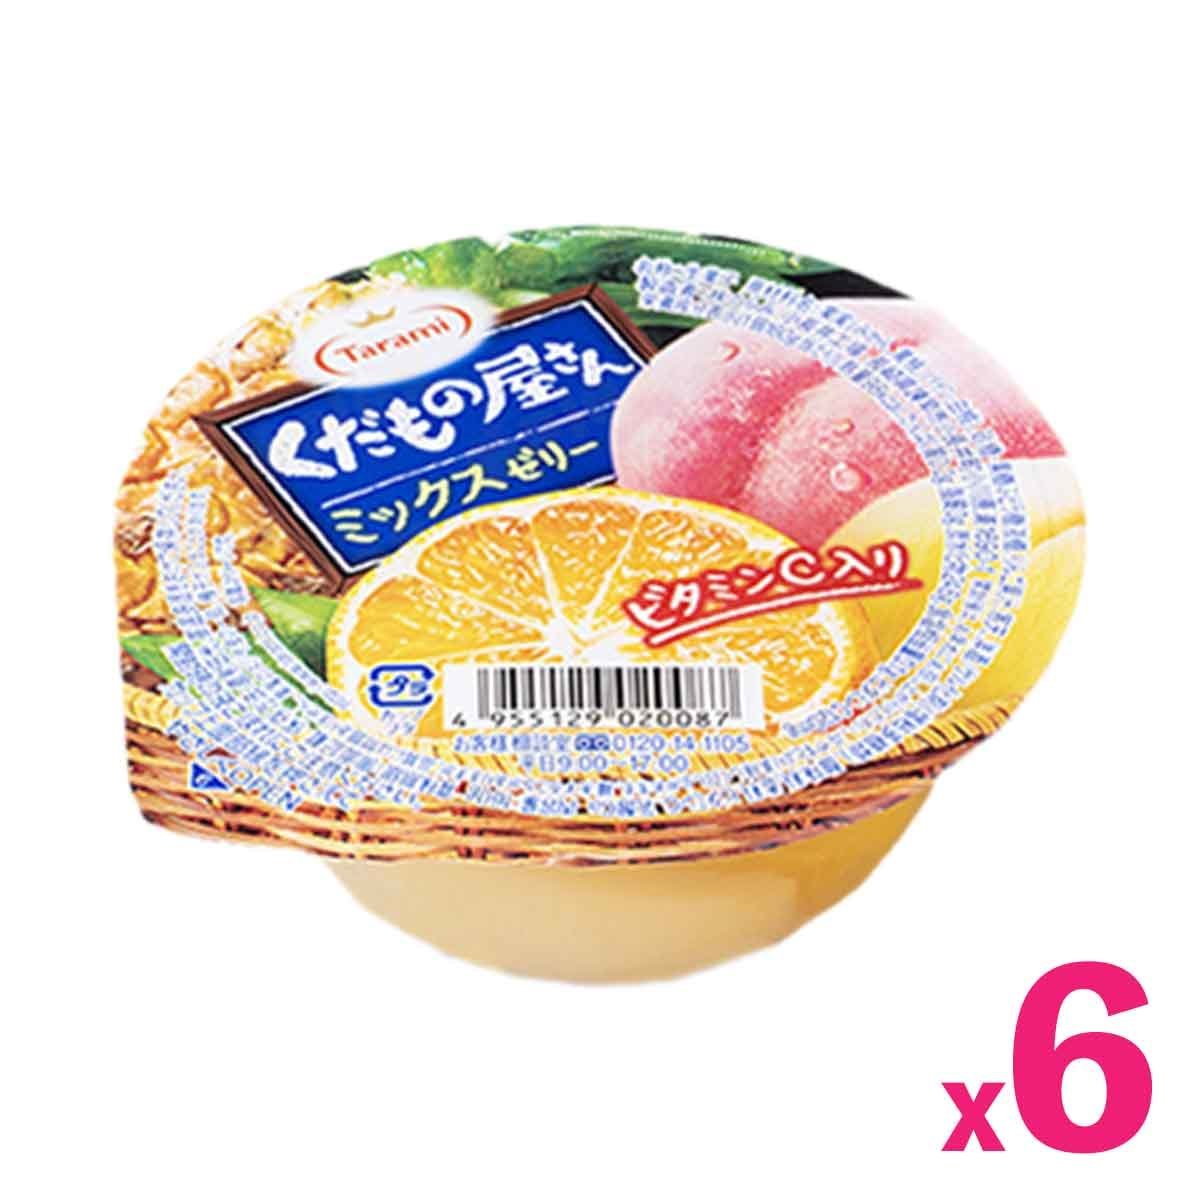 Tarami Tarami Fruit House Juicy Jelly Mix Fruit 160g X 6pcs Hktvmall Online Shopping